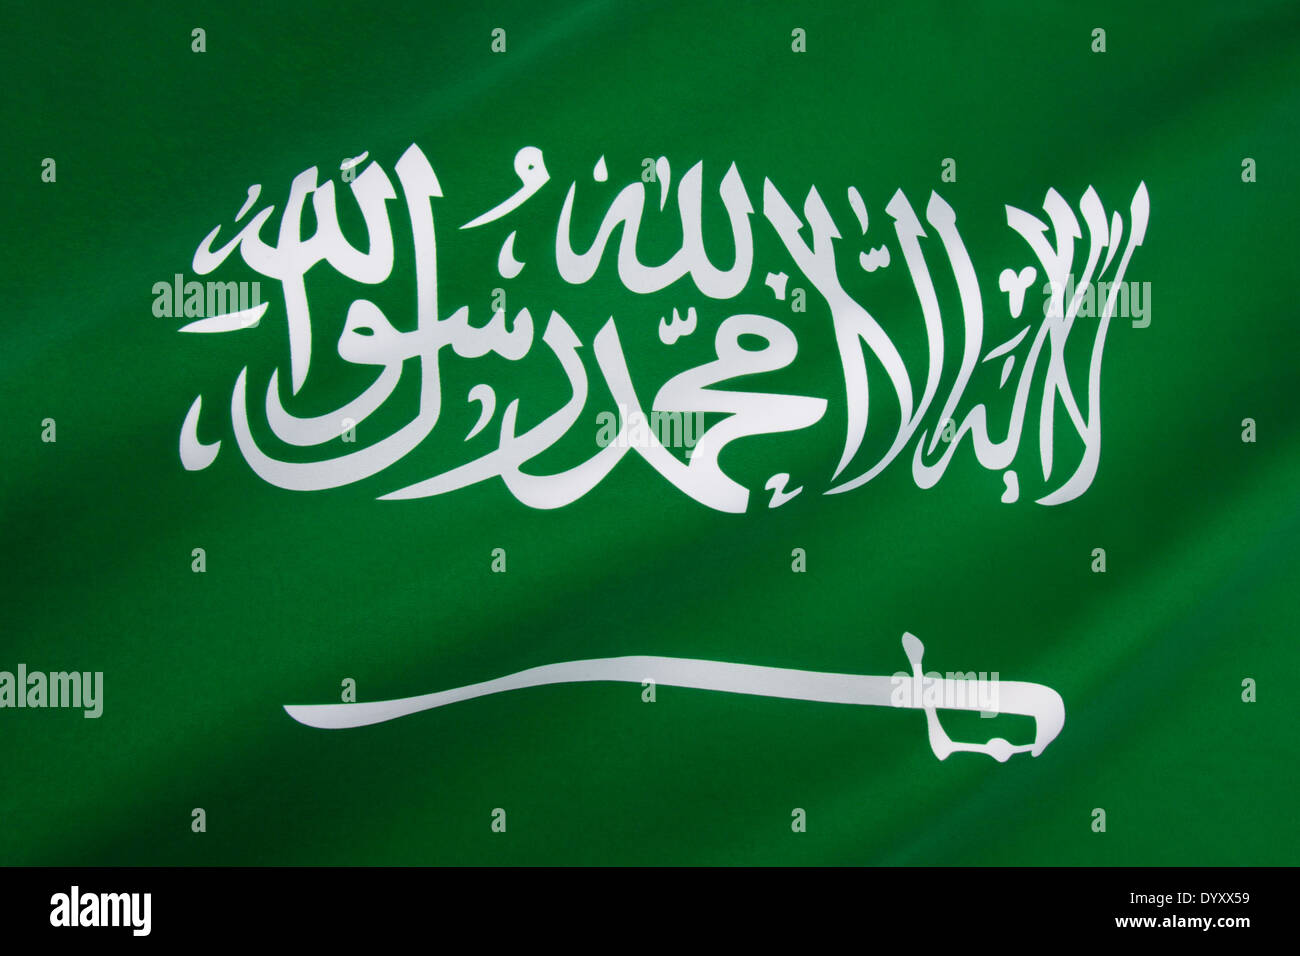 The flag of Saudi Arabia Stock Photo